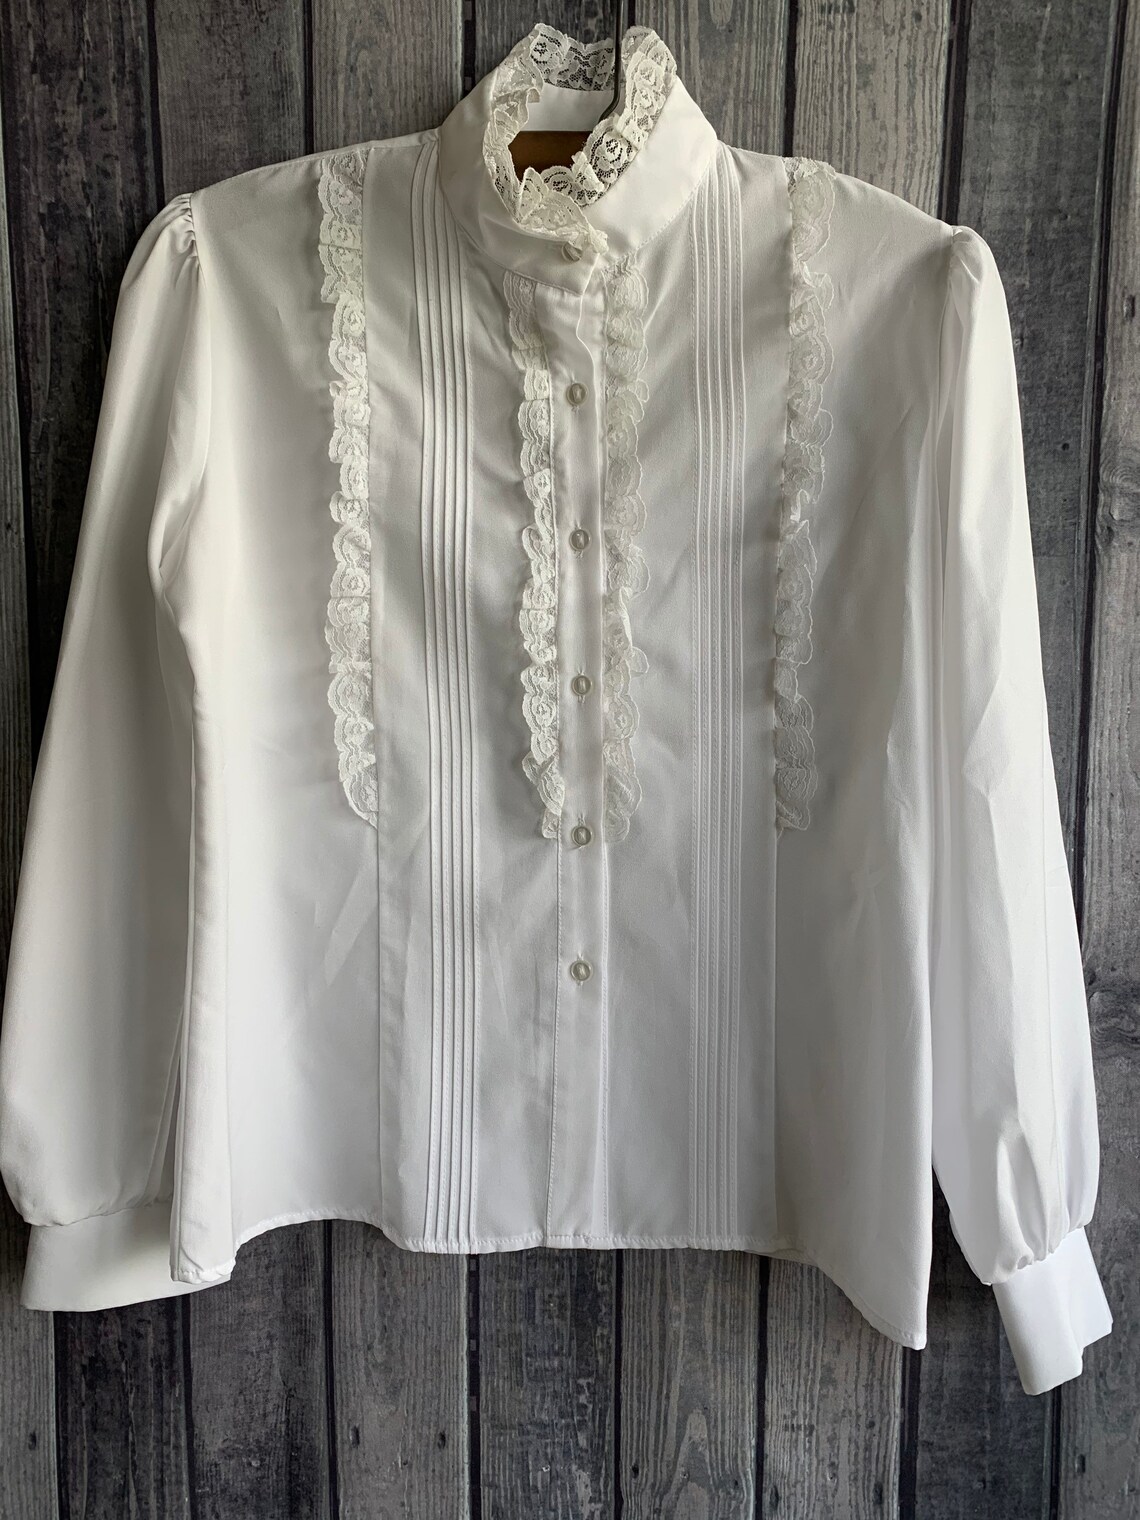 1989 vintage white lacy ruffle high neck blouse | Etsy